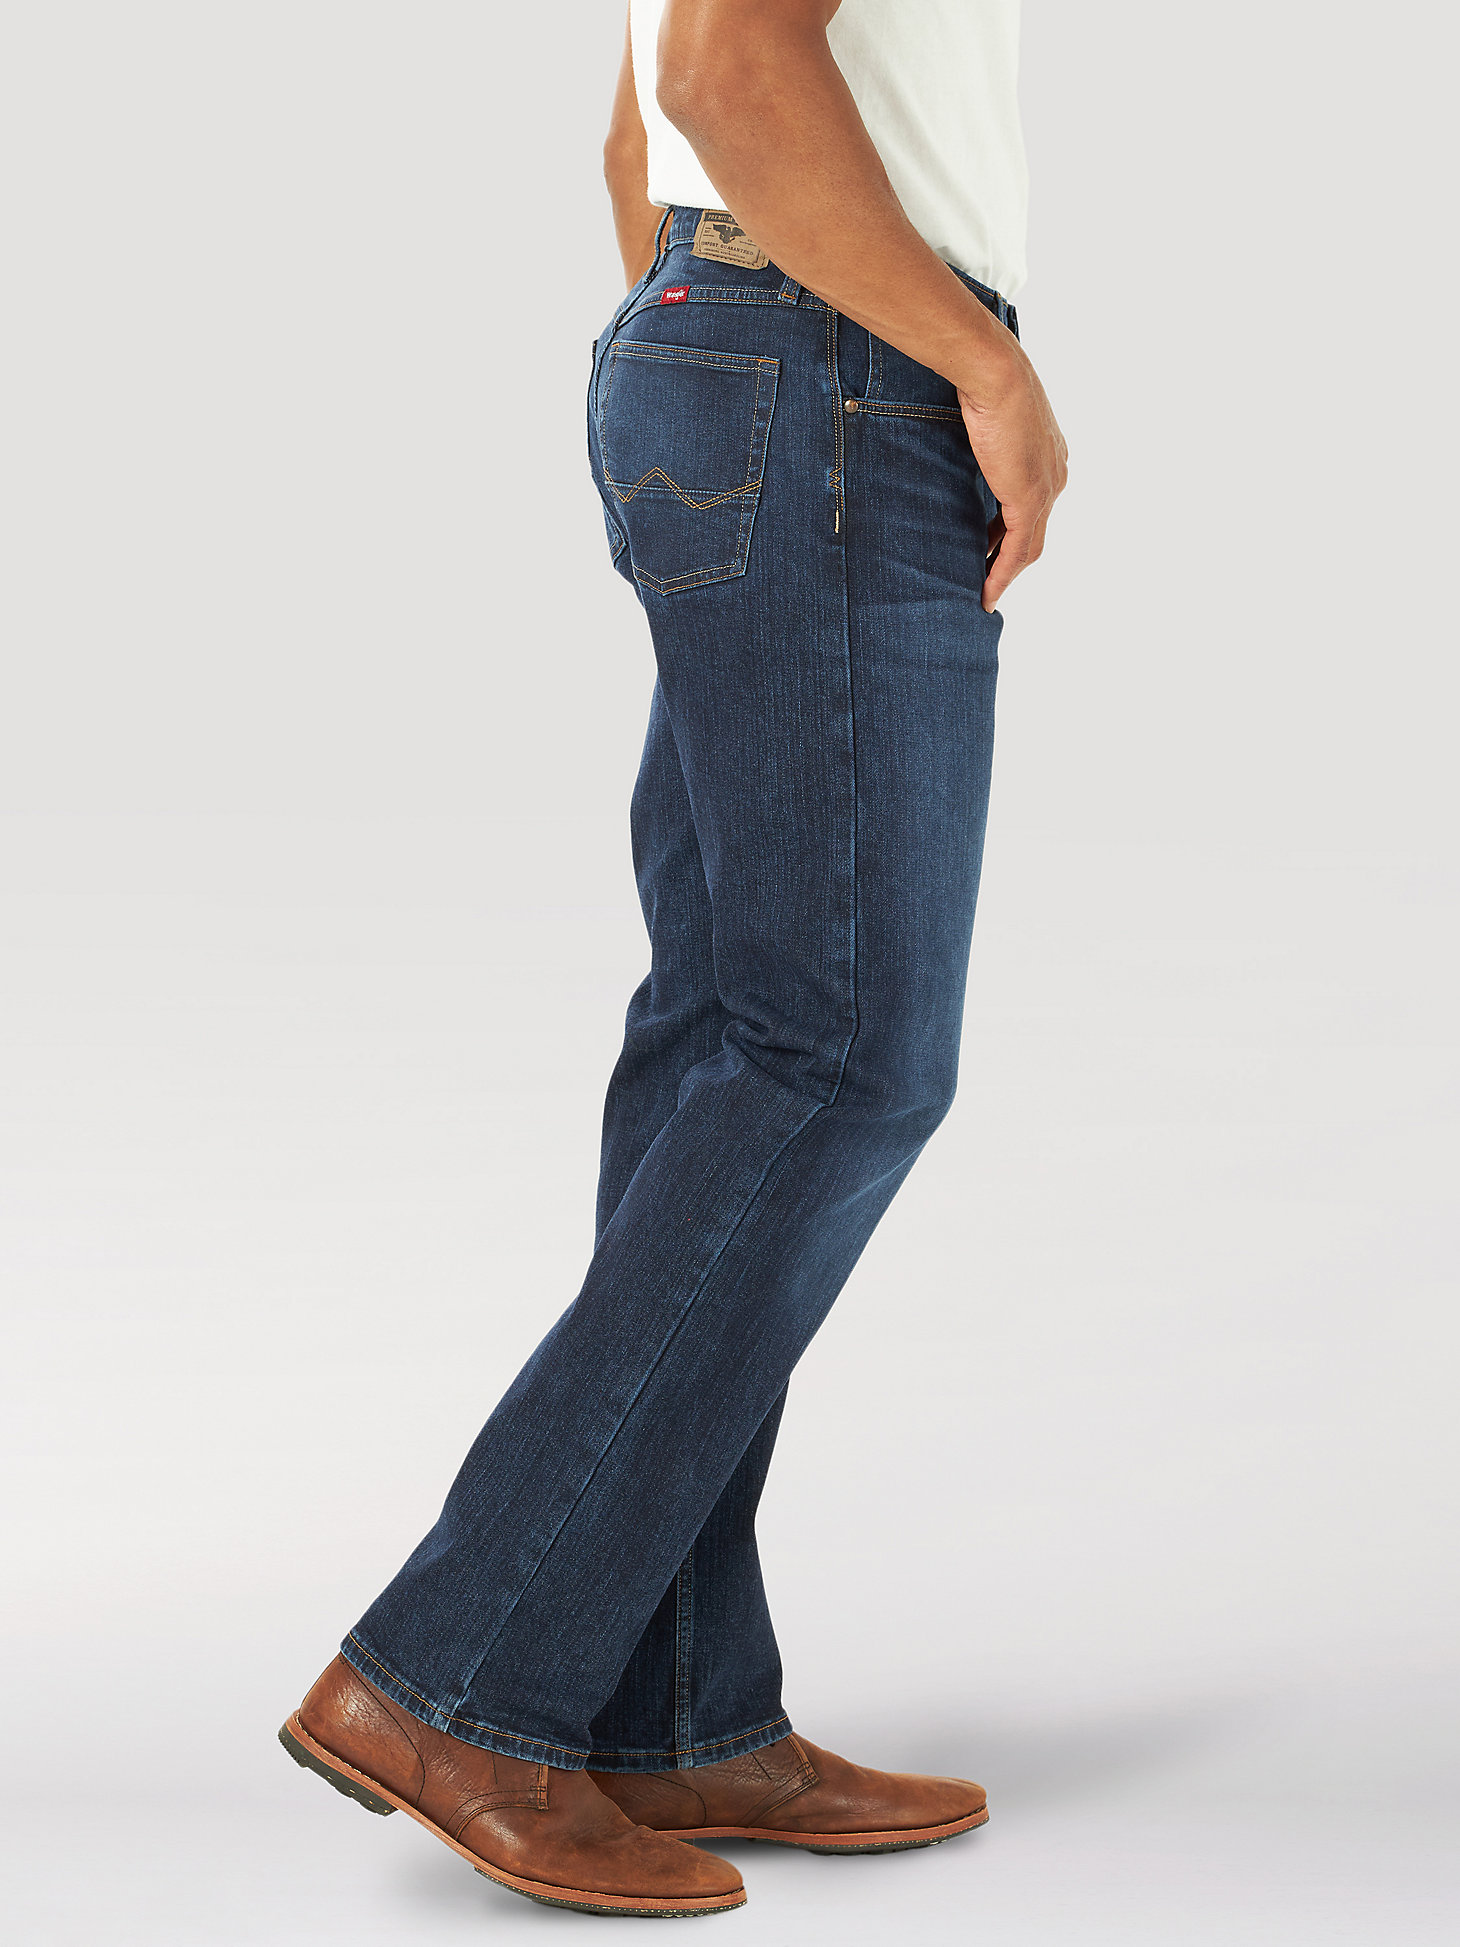 Men's Five Star Premium Straight Fit Jean